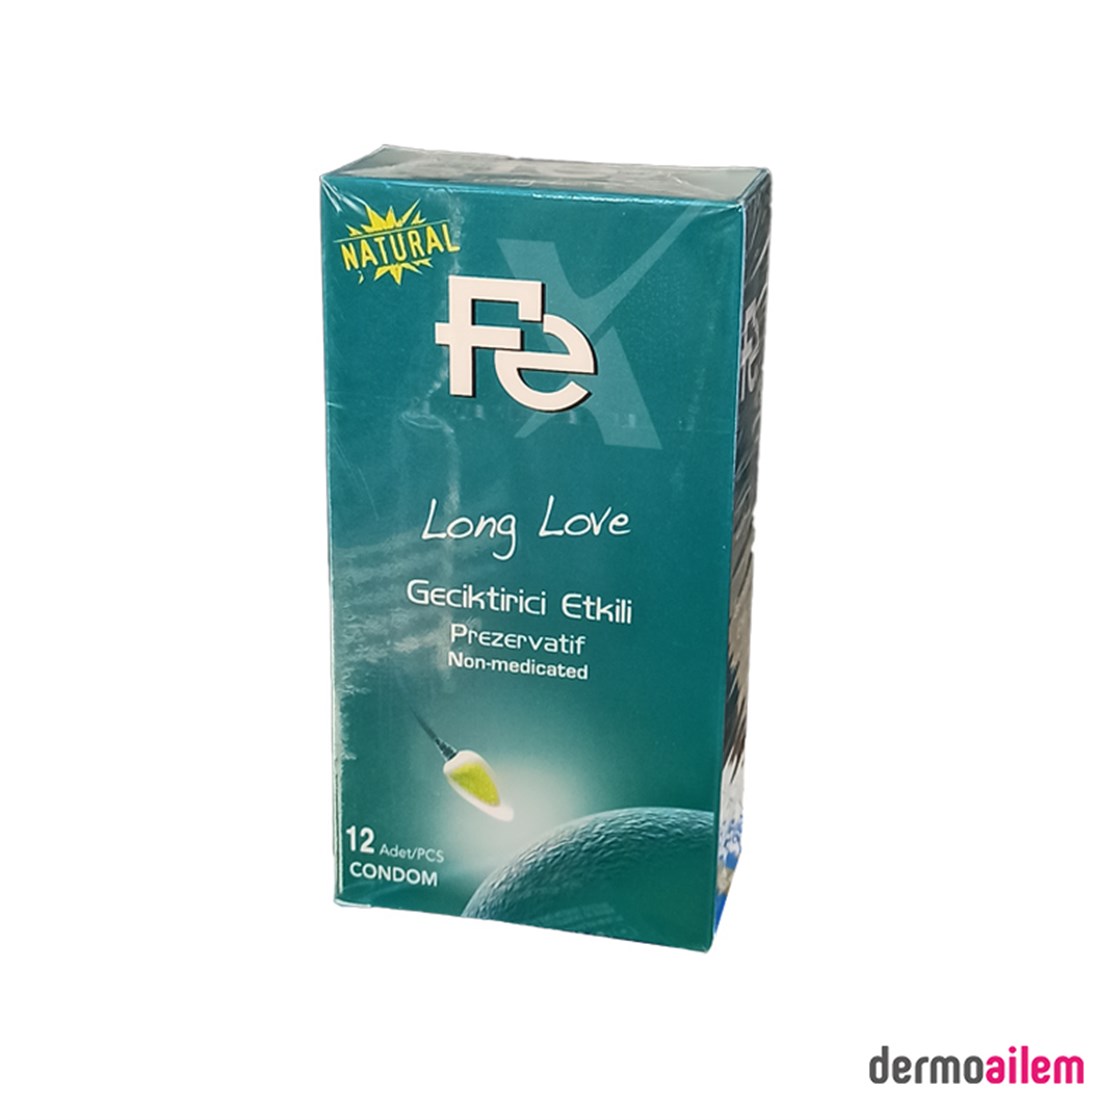 Fe Prezervatif Long Love Geciktirici Etkili 12 Adet | Dermoailem